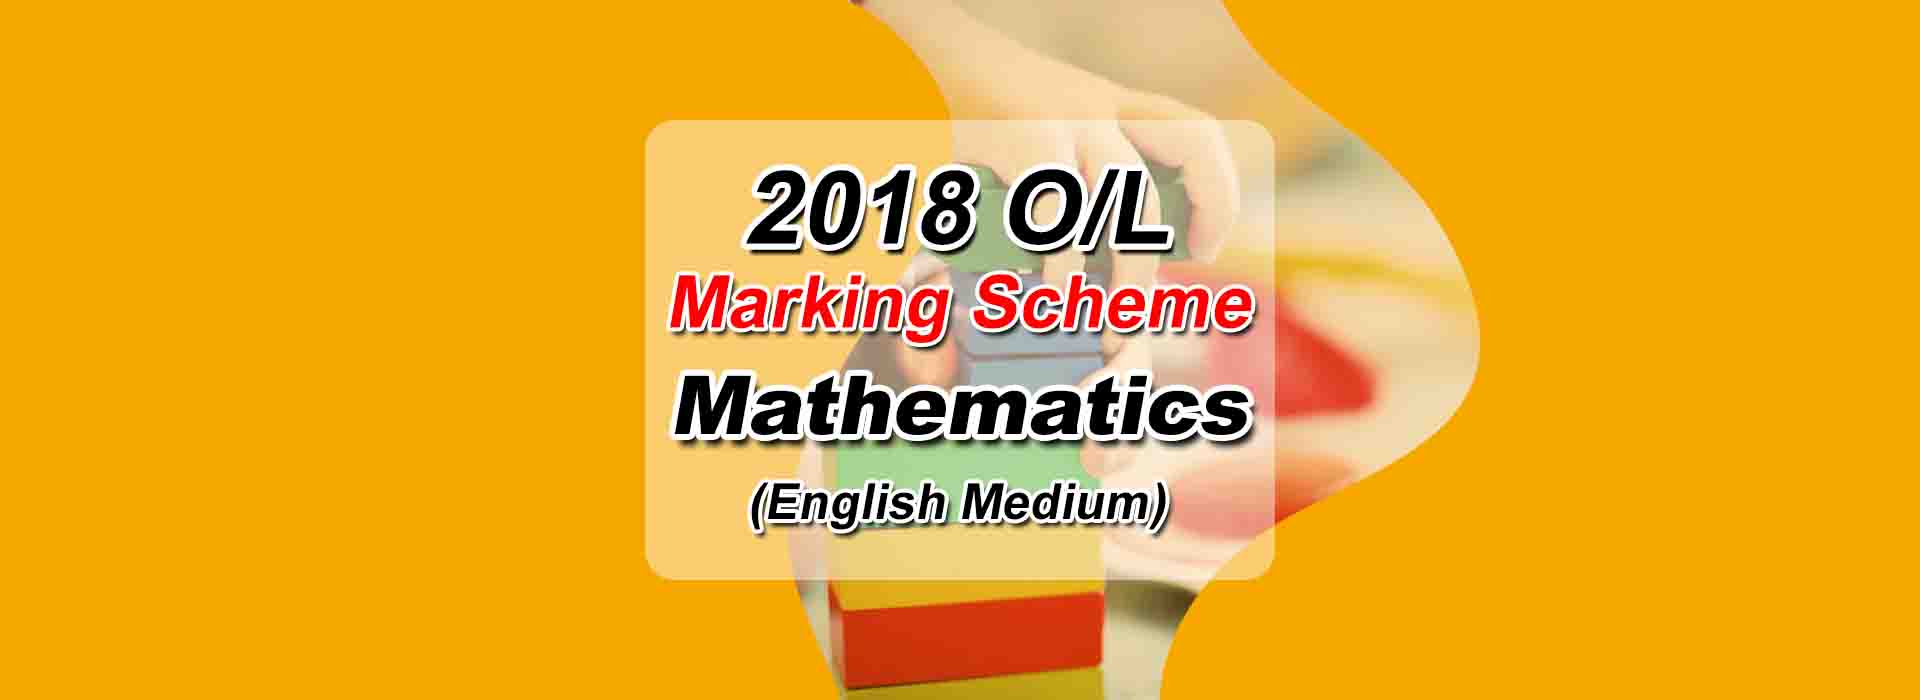 Download 2018 O/L Maths English Medium Marking Scheme